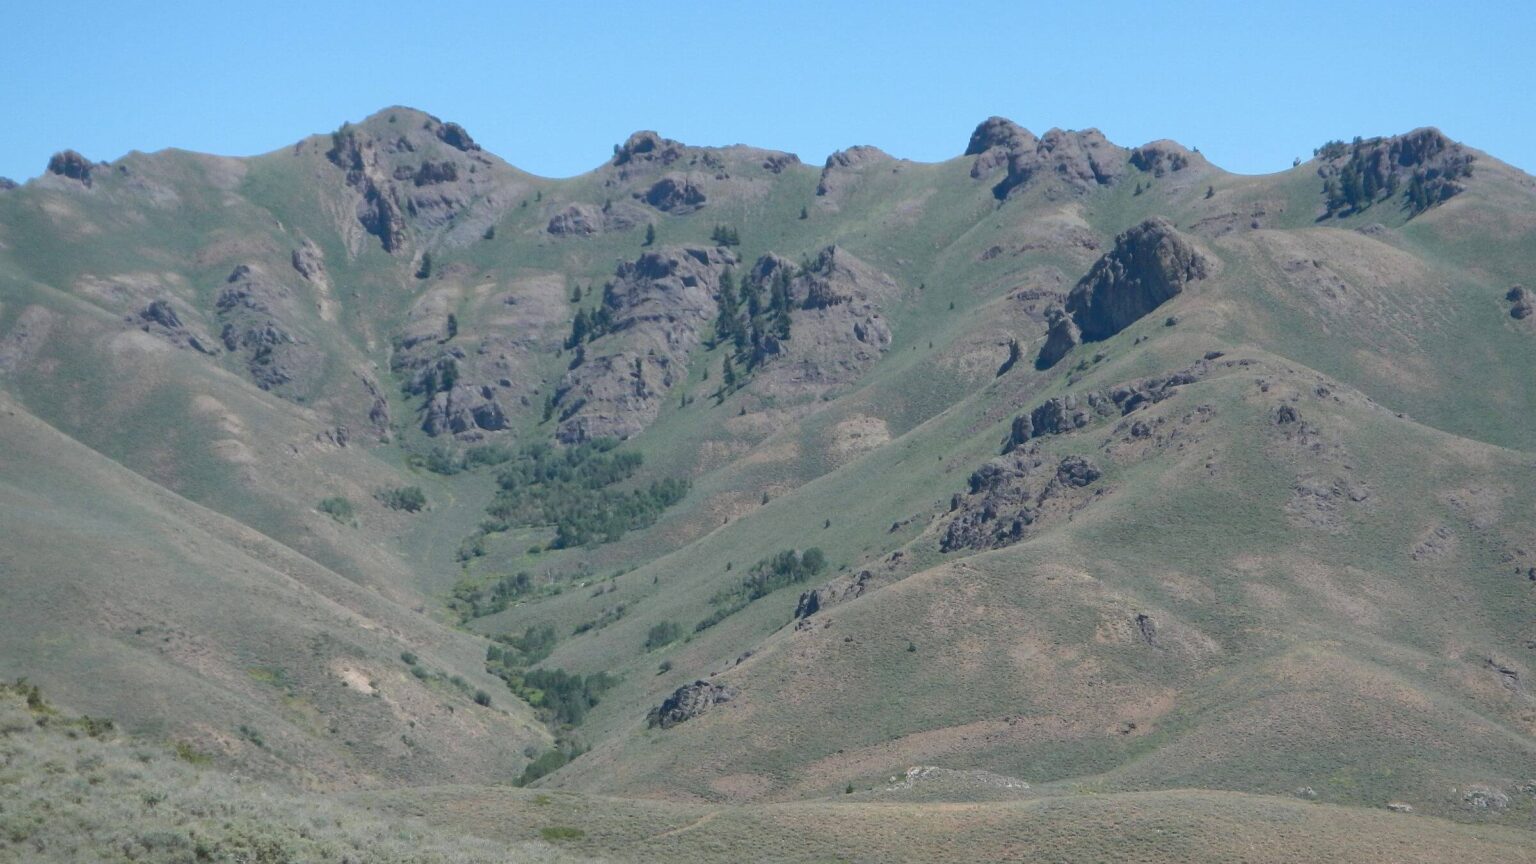 Pioneer Mountains (Idaho), Friedman Wilderness Study Area, August